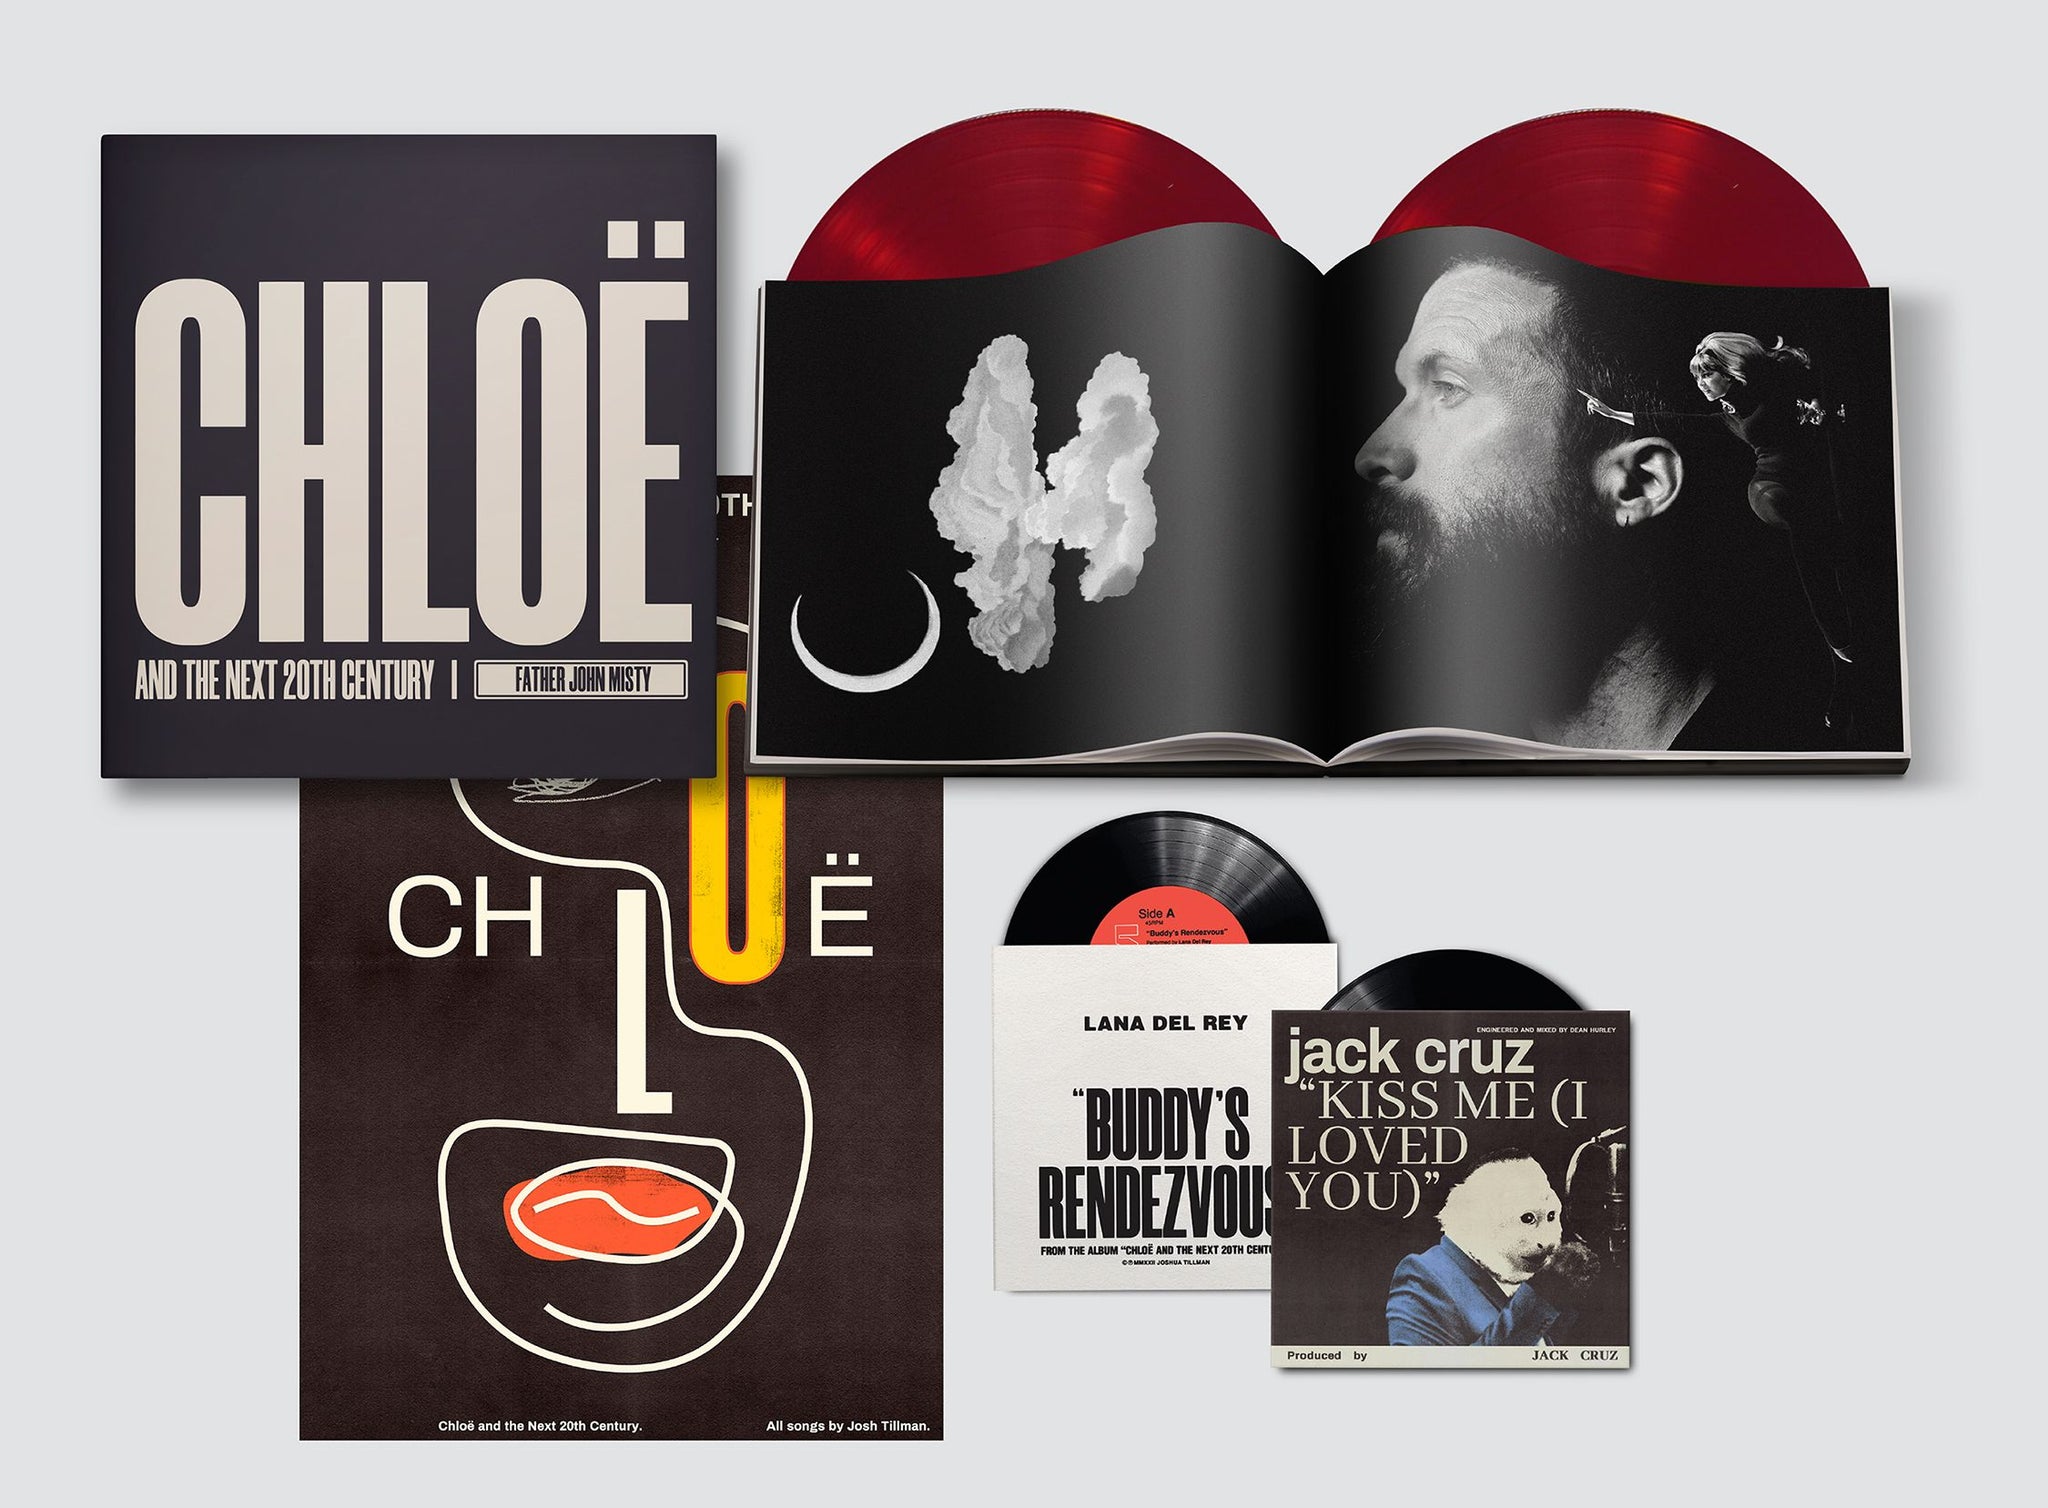 Father John Misty - Chloë And The Next 20th Century (Boxset LP With Red Vinyl + 2 x 7" Bonus Singles)